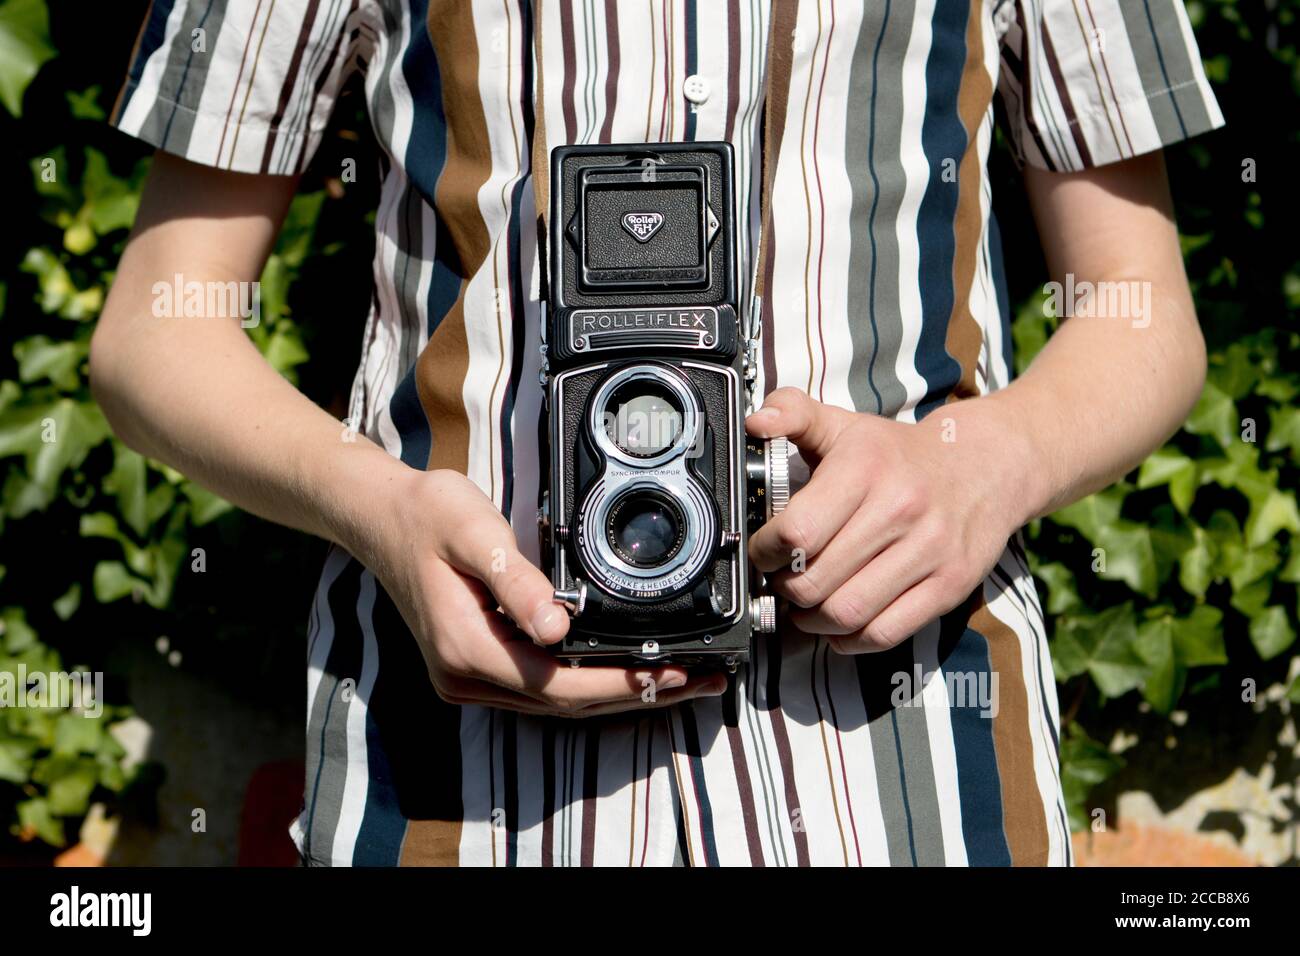 Rolleiflex twin reflex medium format vintage camera in front of a striped shirt Stock Photo